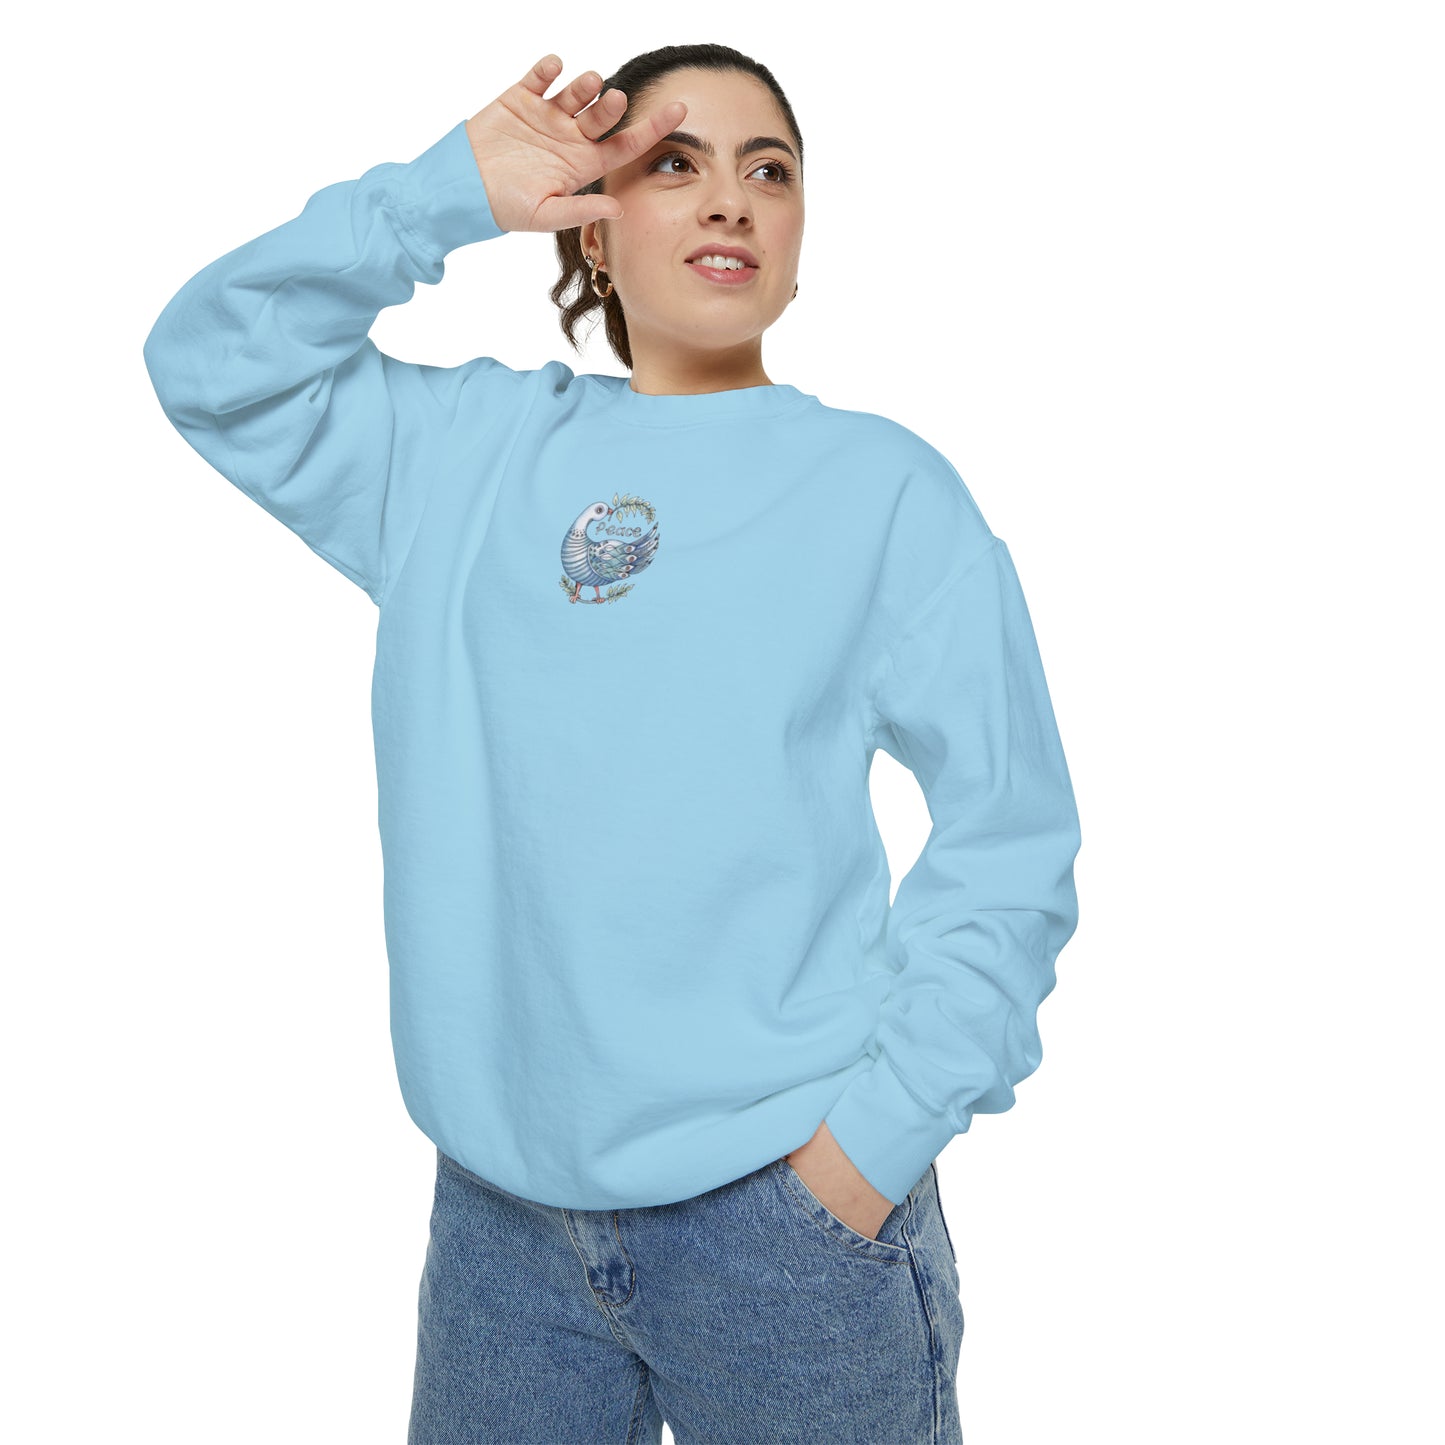 "Peace Dove" Garment-Dyed Sweatshirt